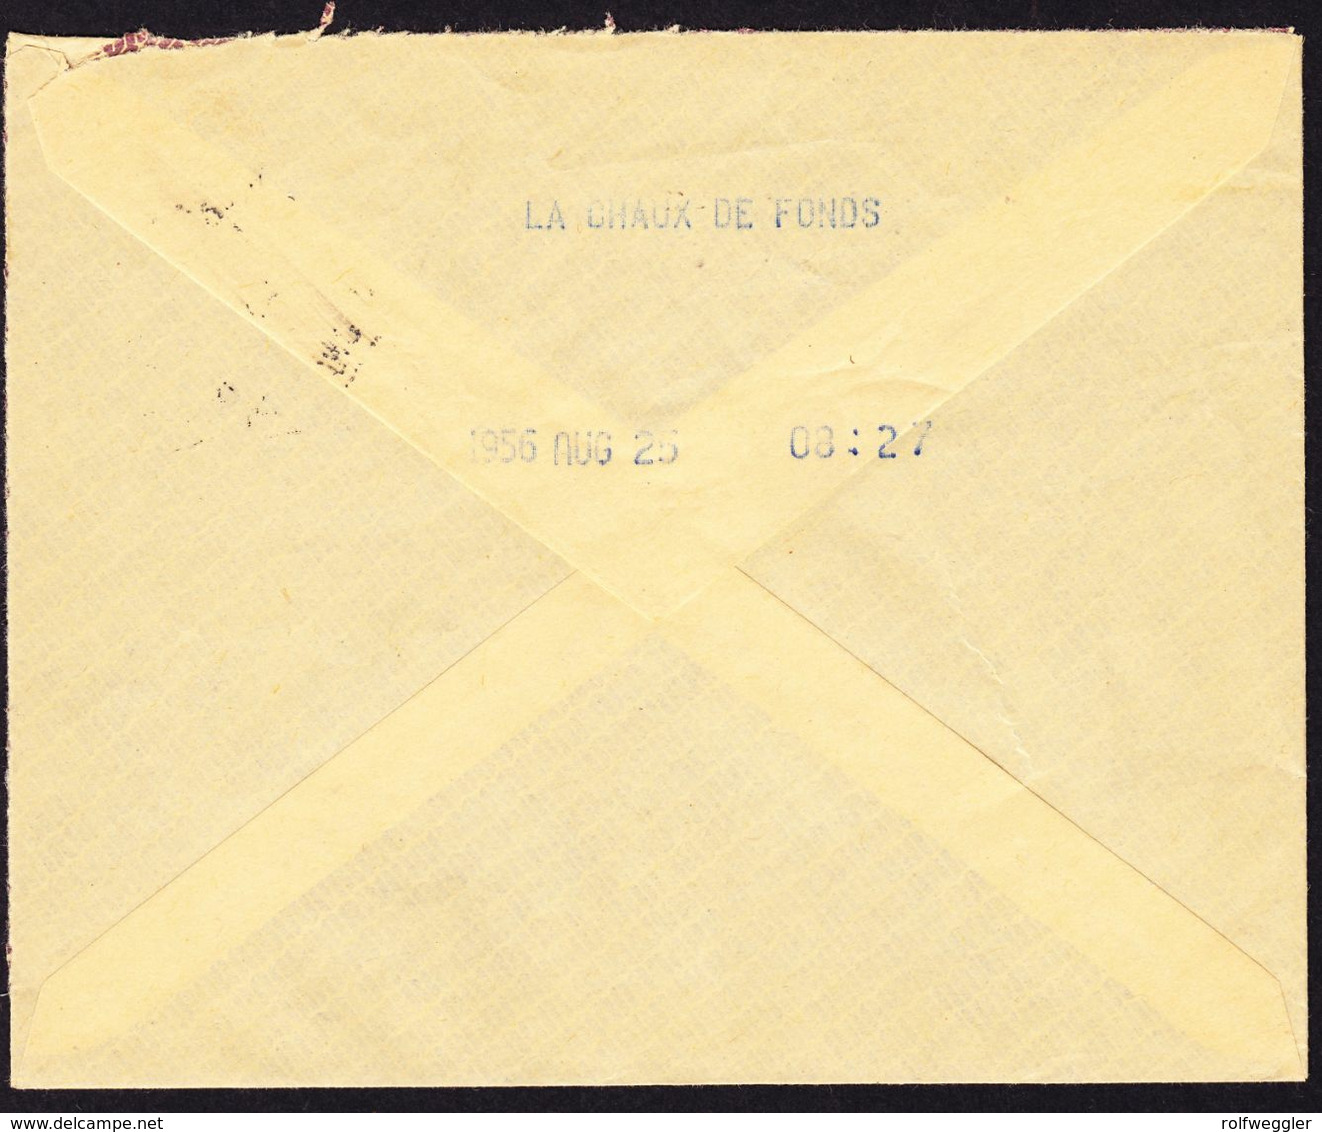 1956 Telegramm Couvert Rot Stempel La-Chaux-de-Fonds Mit Label "Brieftelegramm" - Telegraph